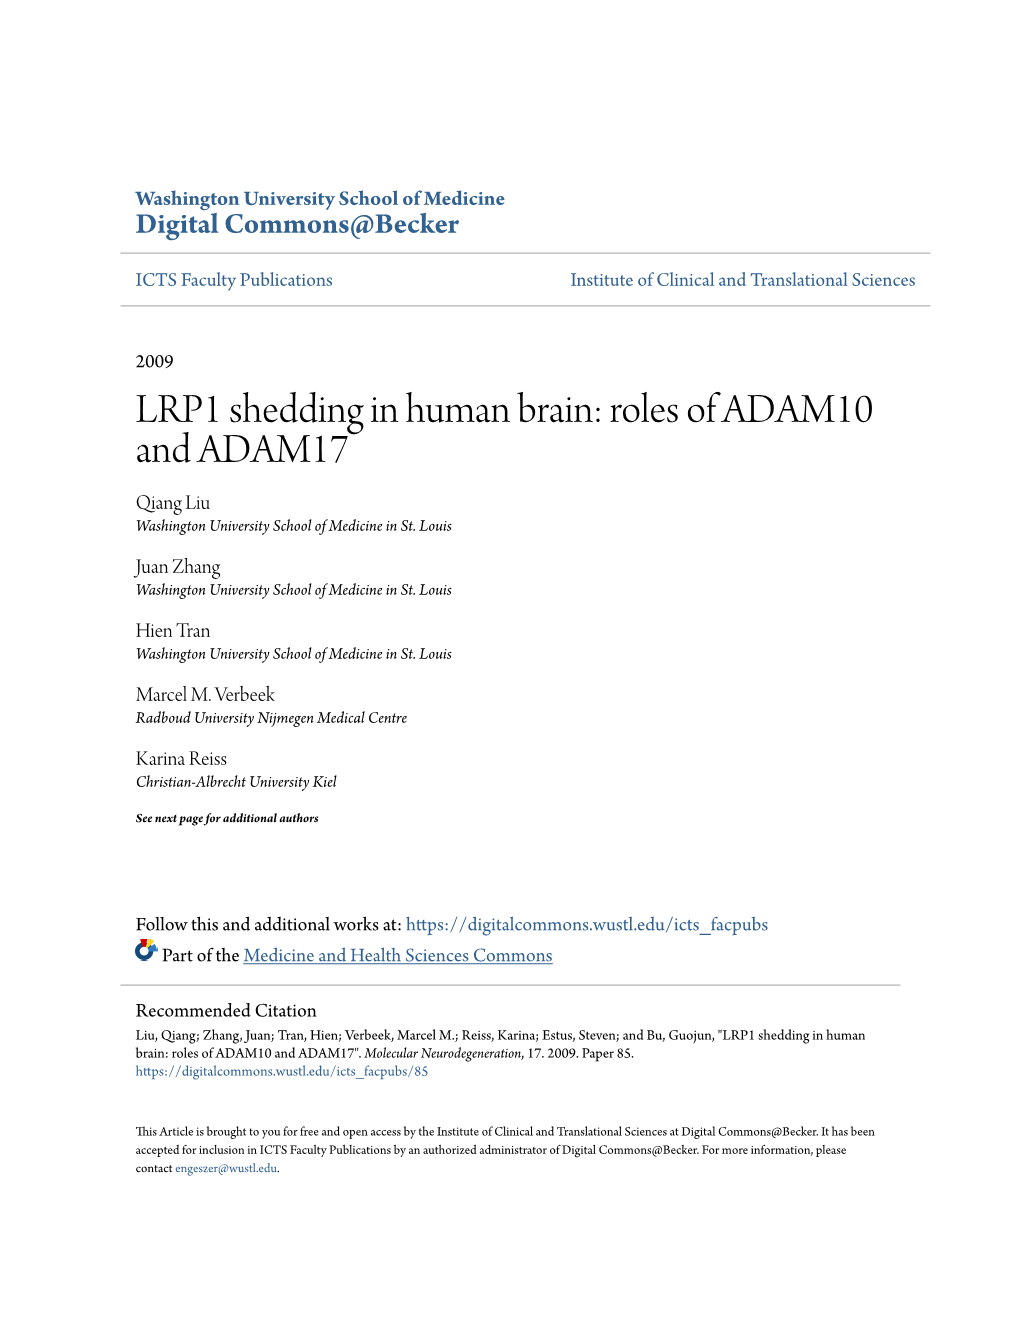 LRP1 Shedding in Human Brain: Roles of ADAM10 and ADAM17 Qiang Liu Washington University School of Medicine in St